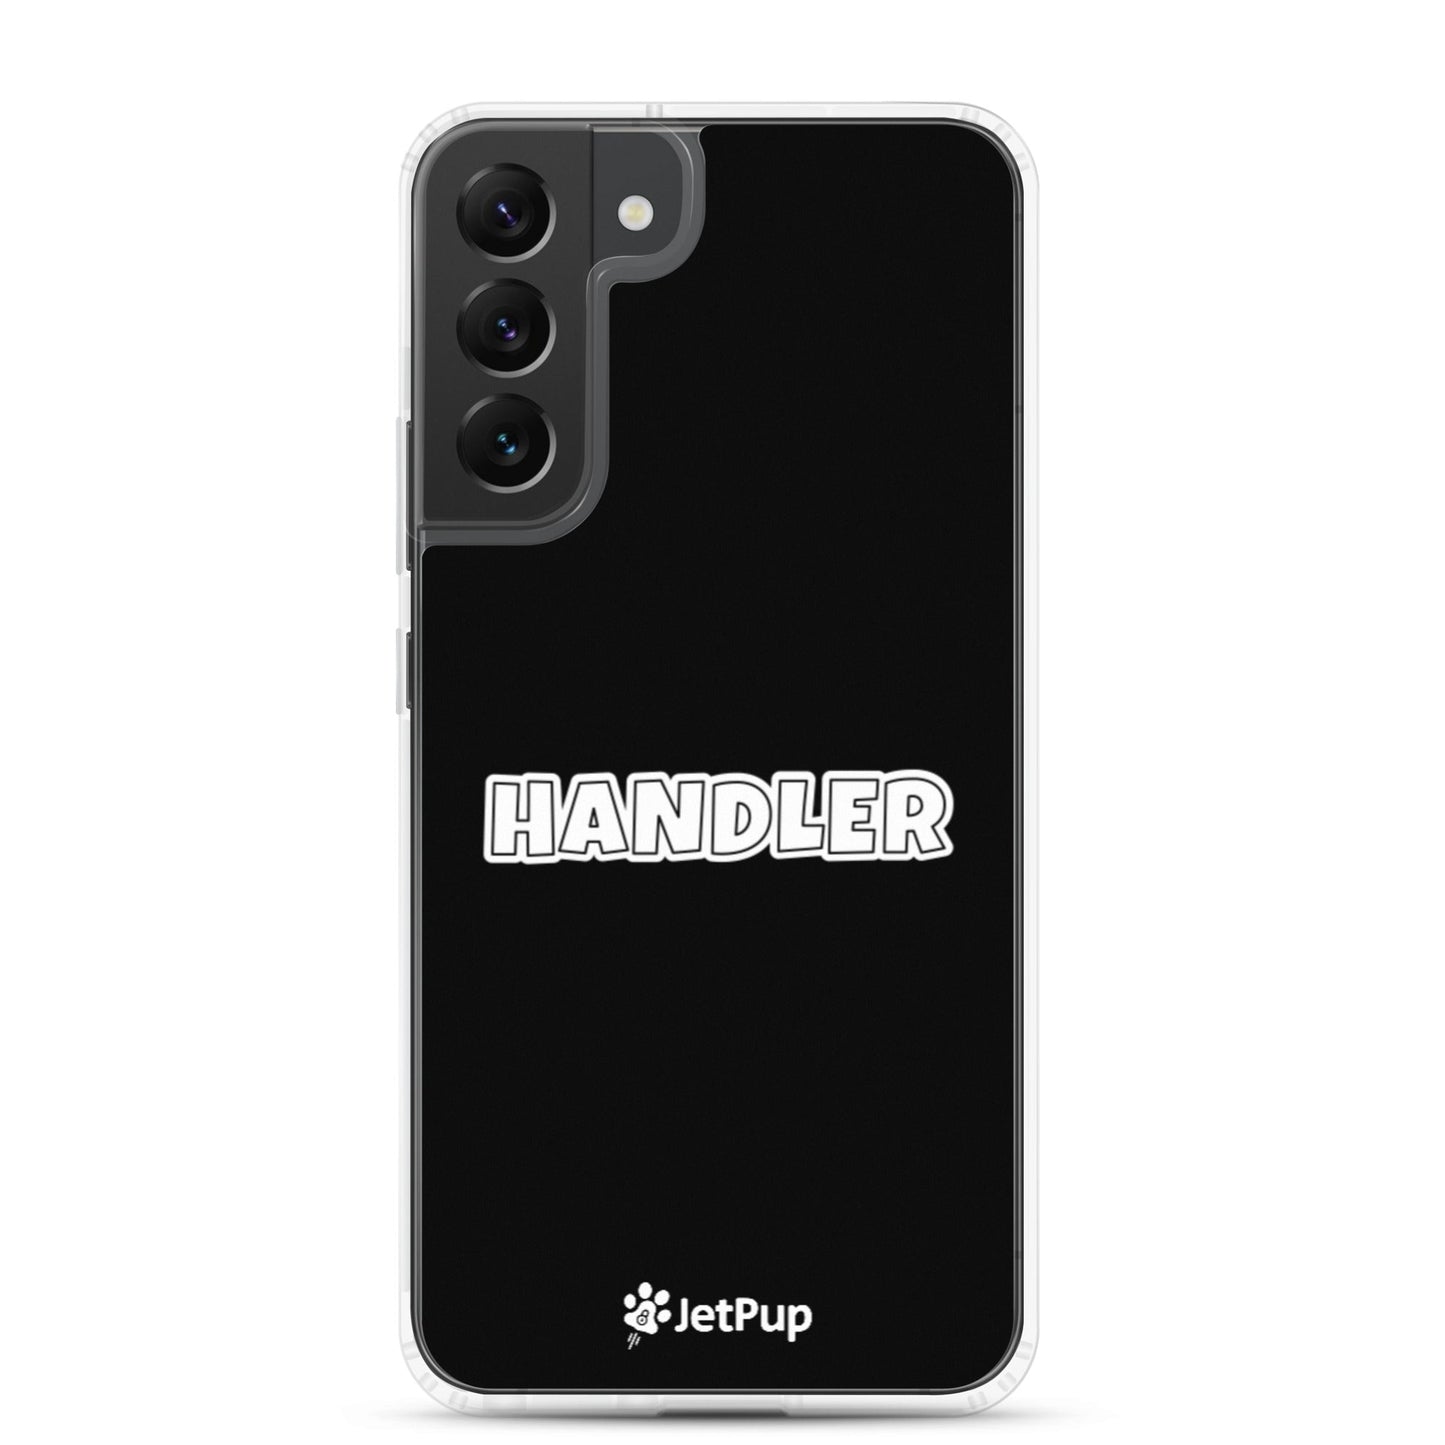 Handler Samsung Case - Black - JetPup